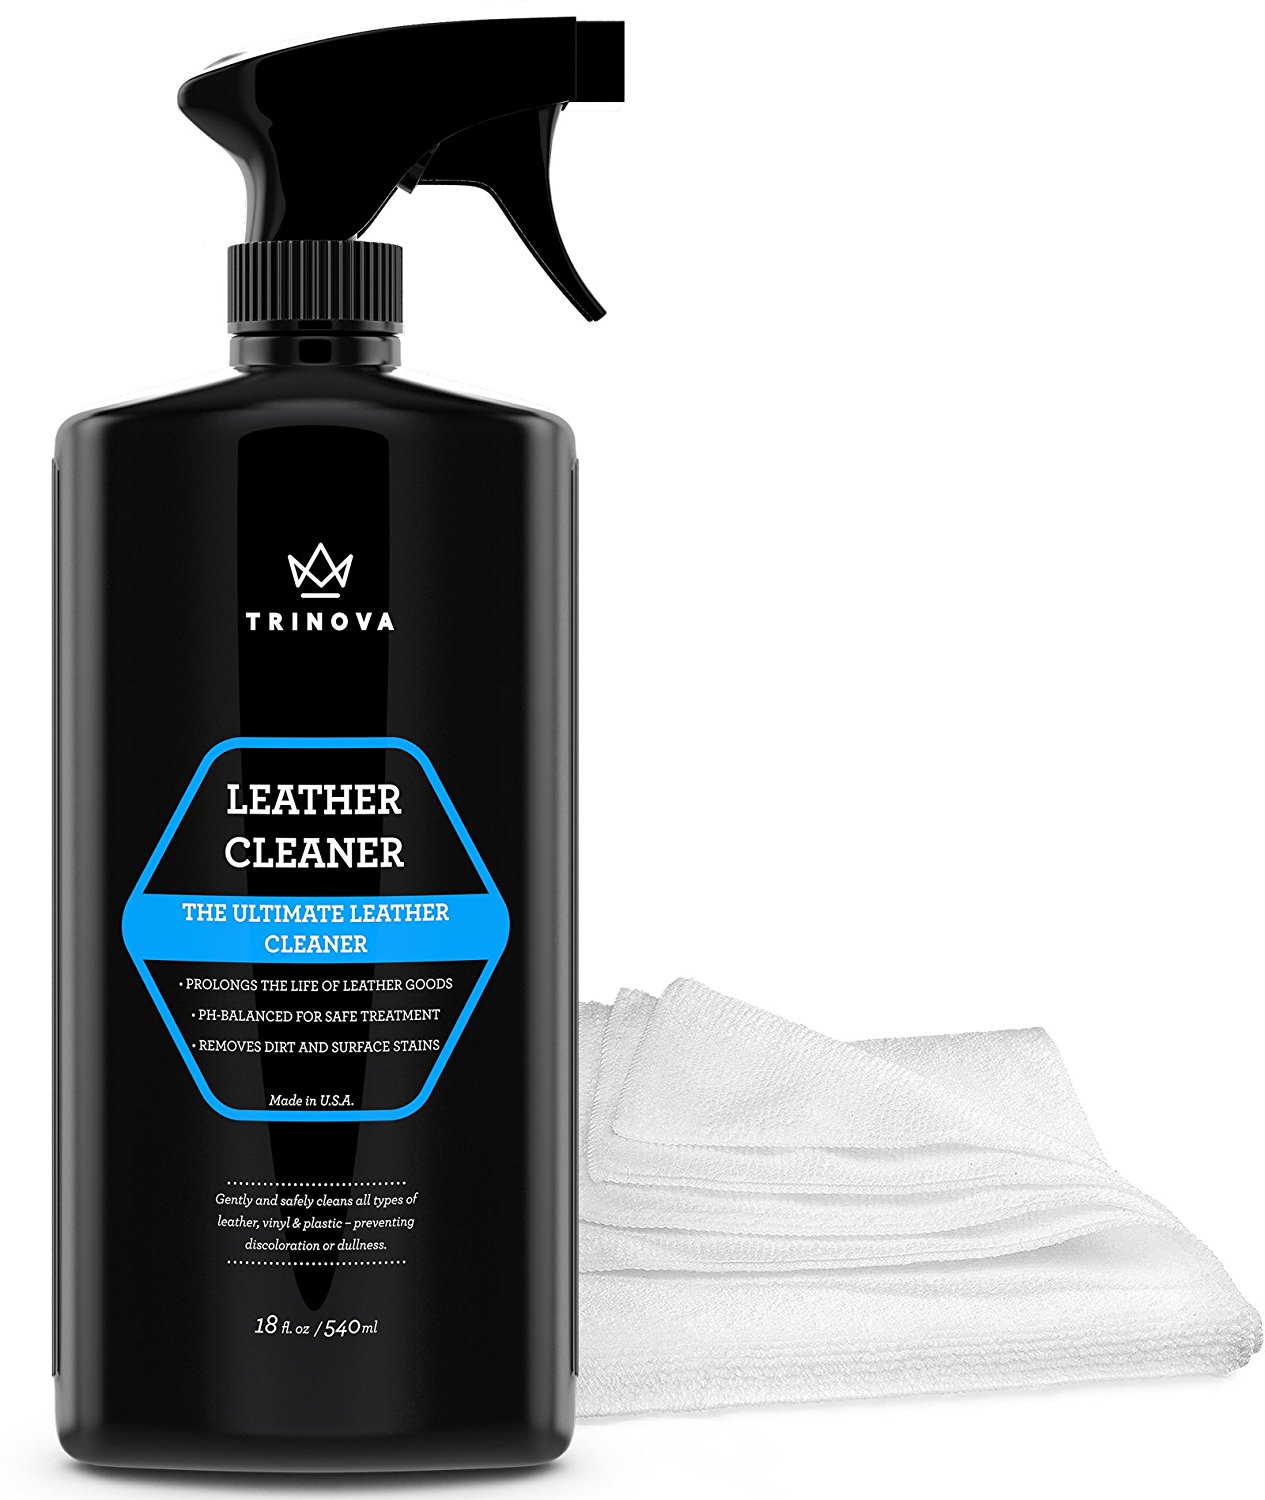 TriNova Leather Cleaner with Microfiber Towel - 18 oz